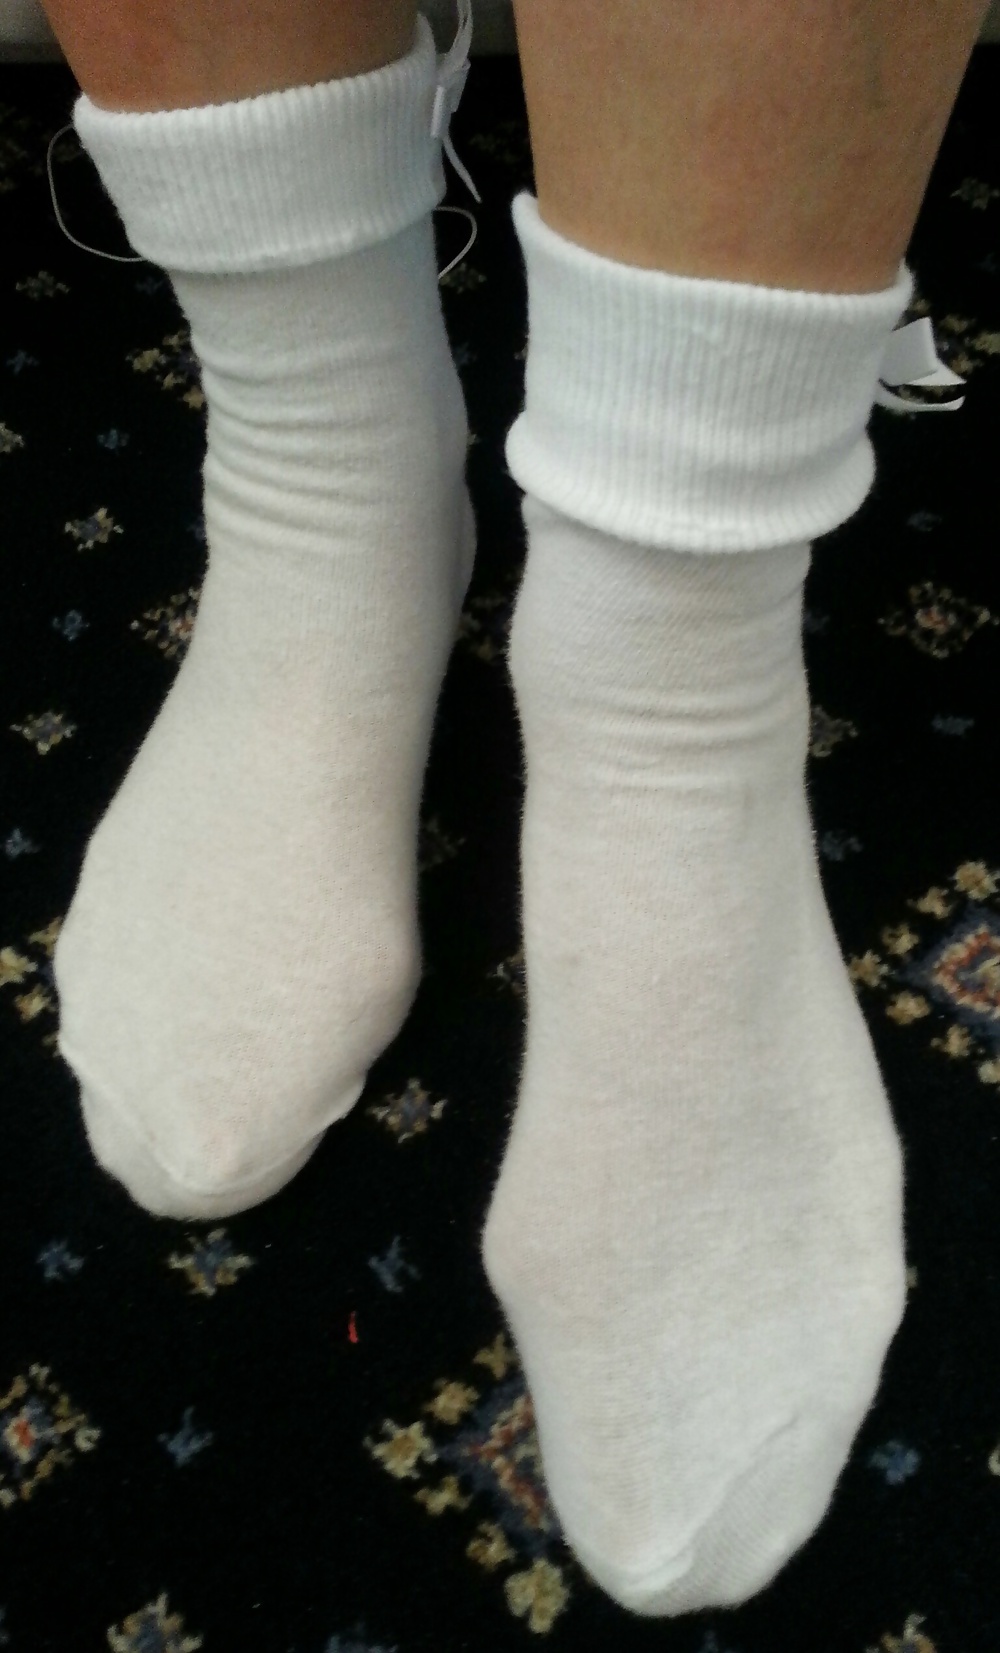 Kt white socks and all  #28340308